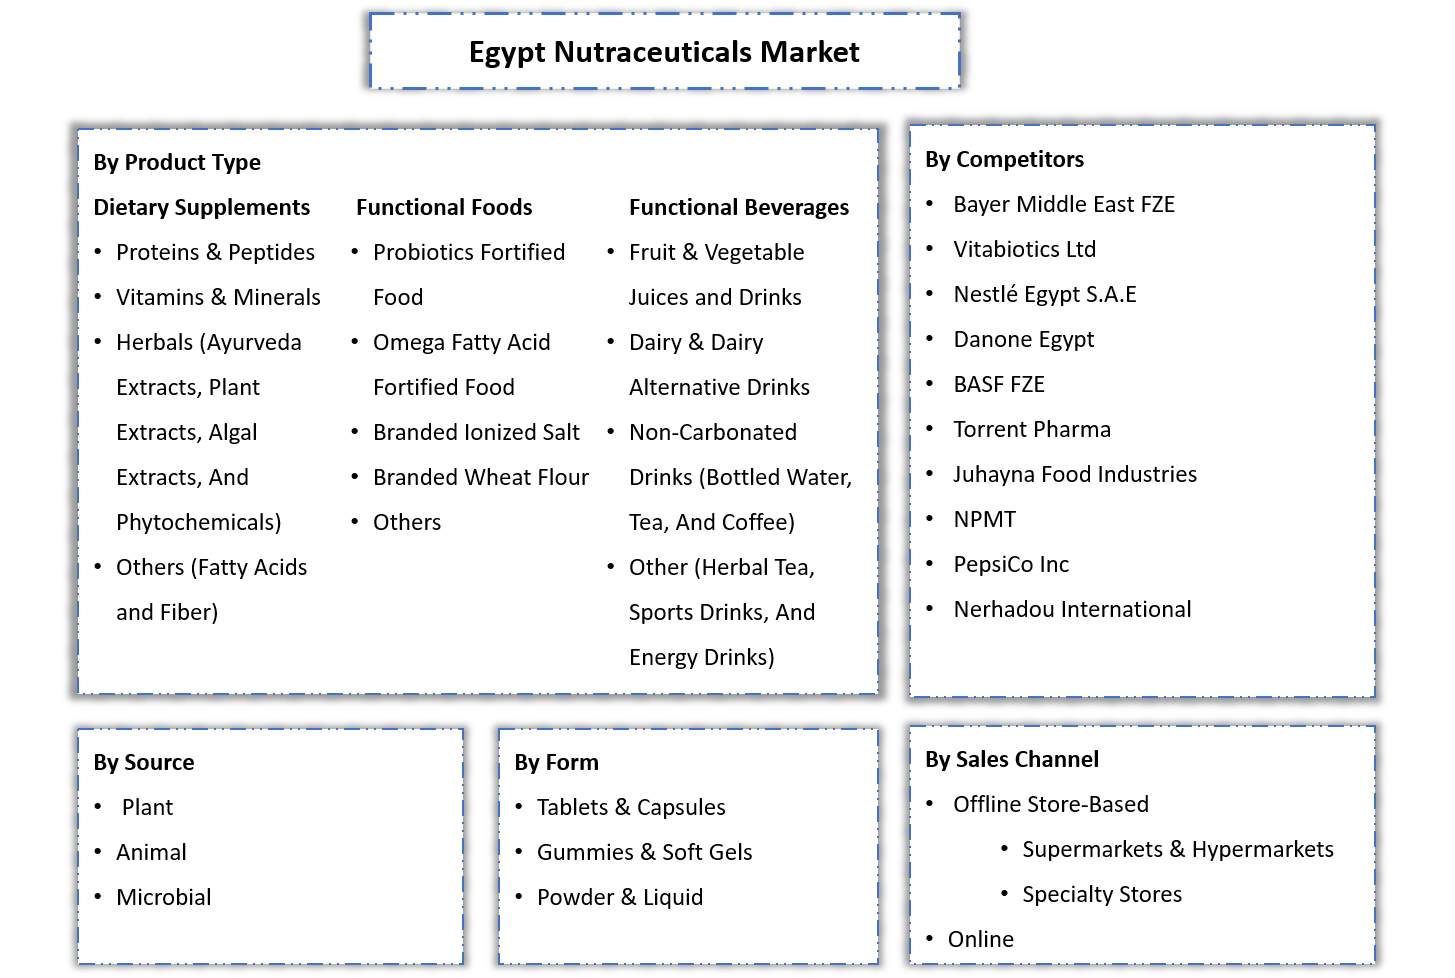 Egypt Nutraceuticals Market Segmentation Slide